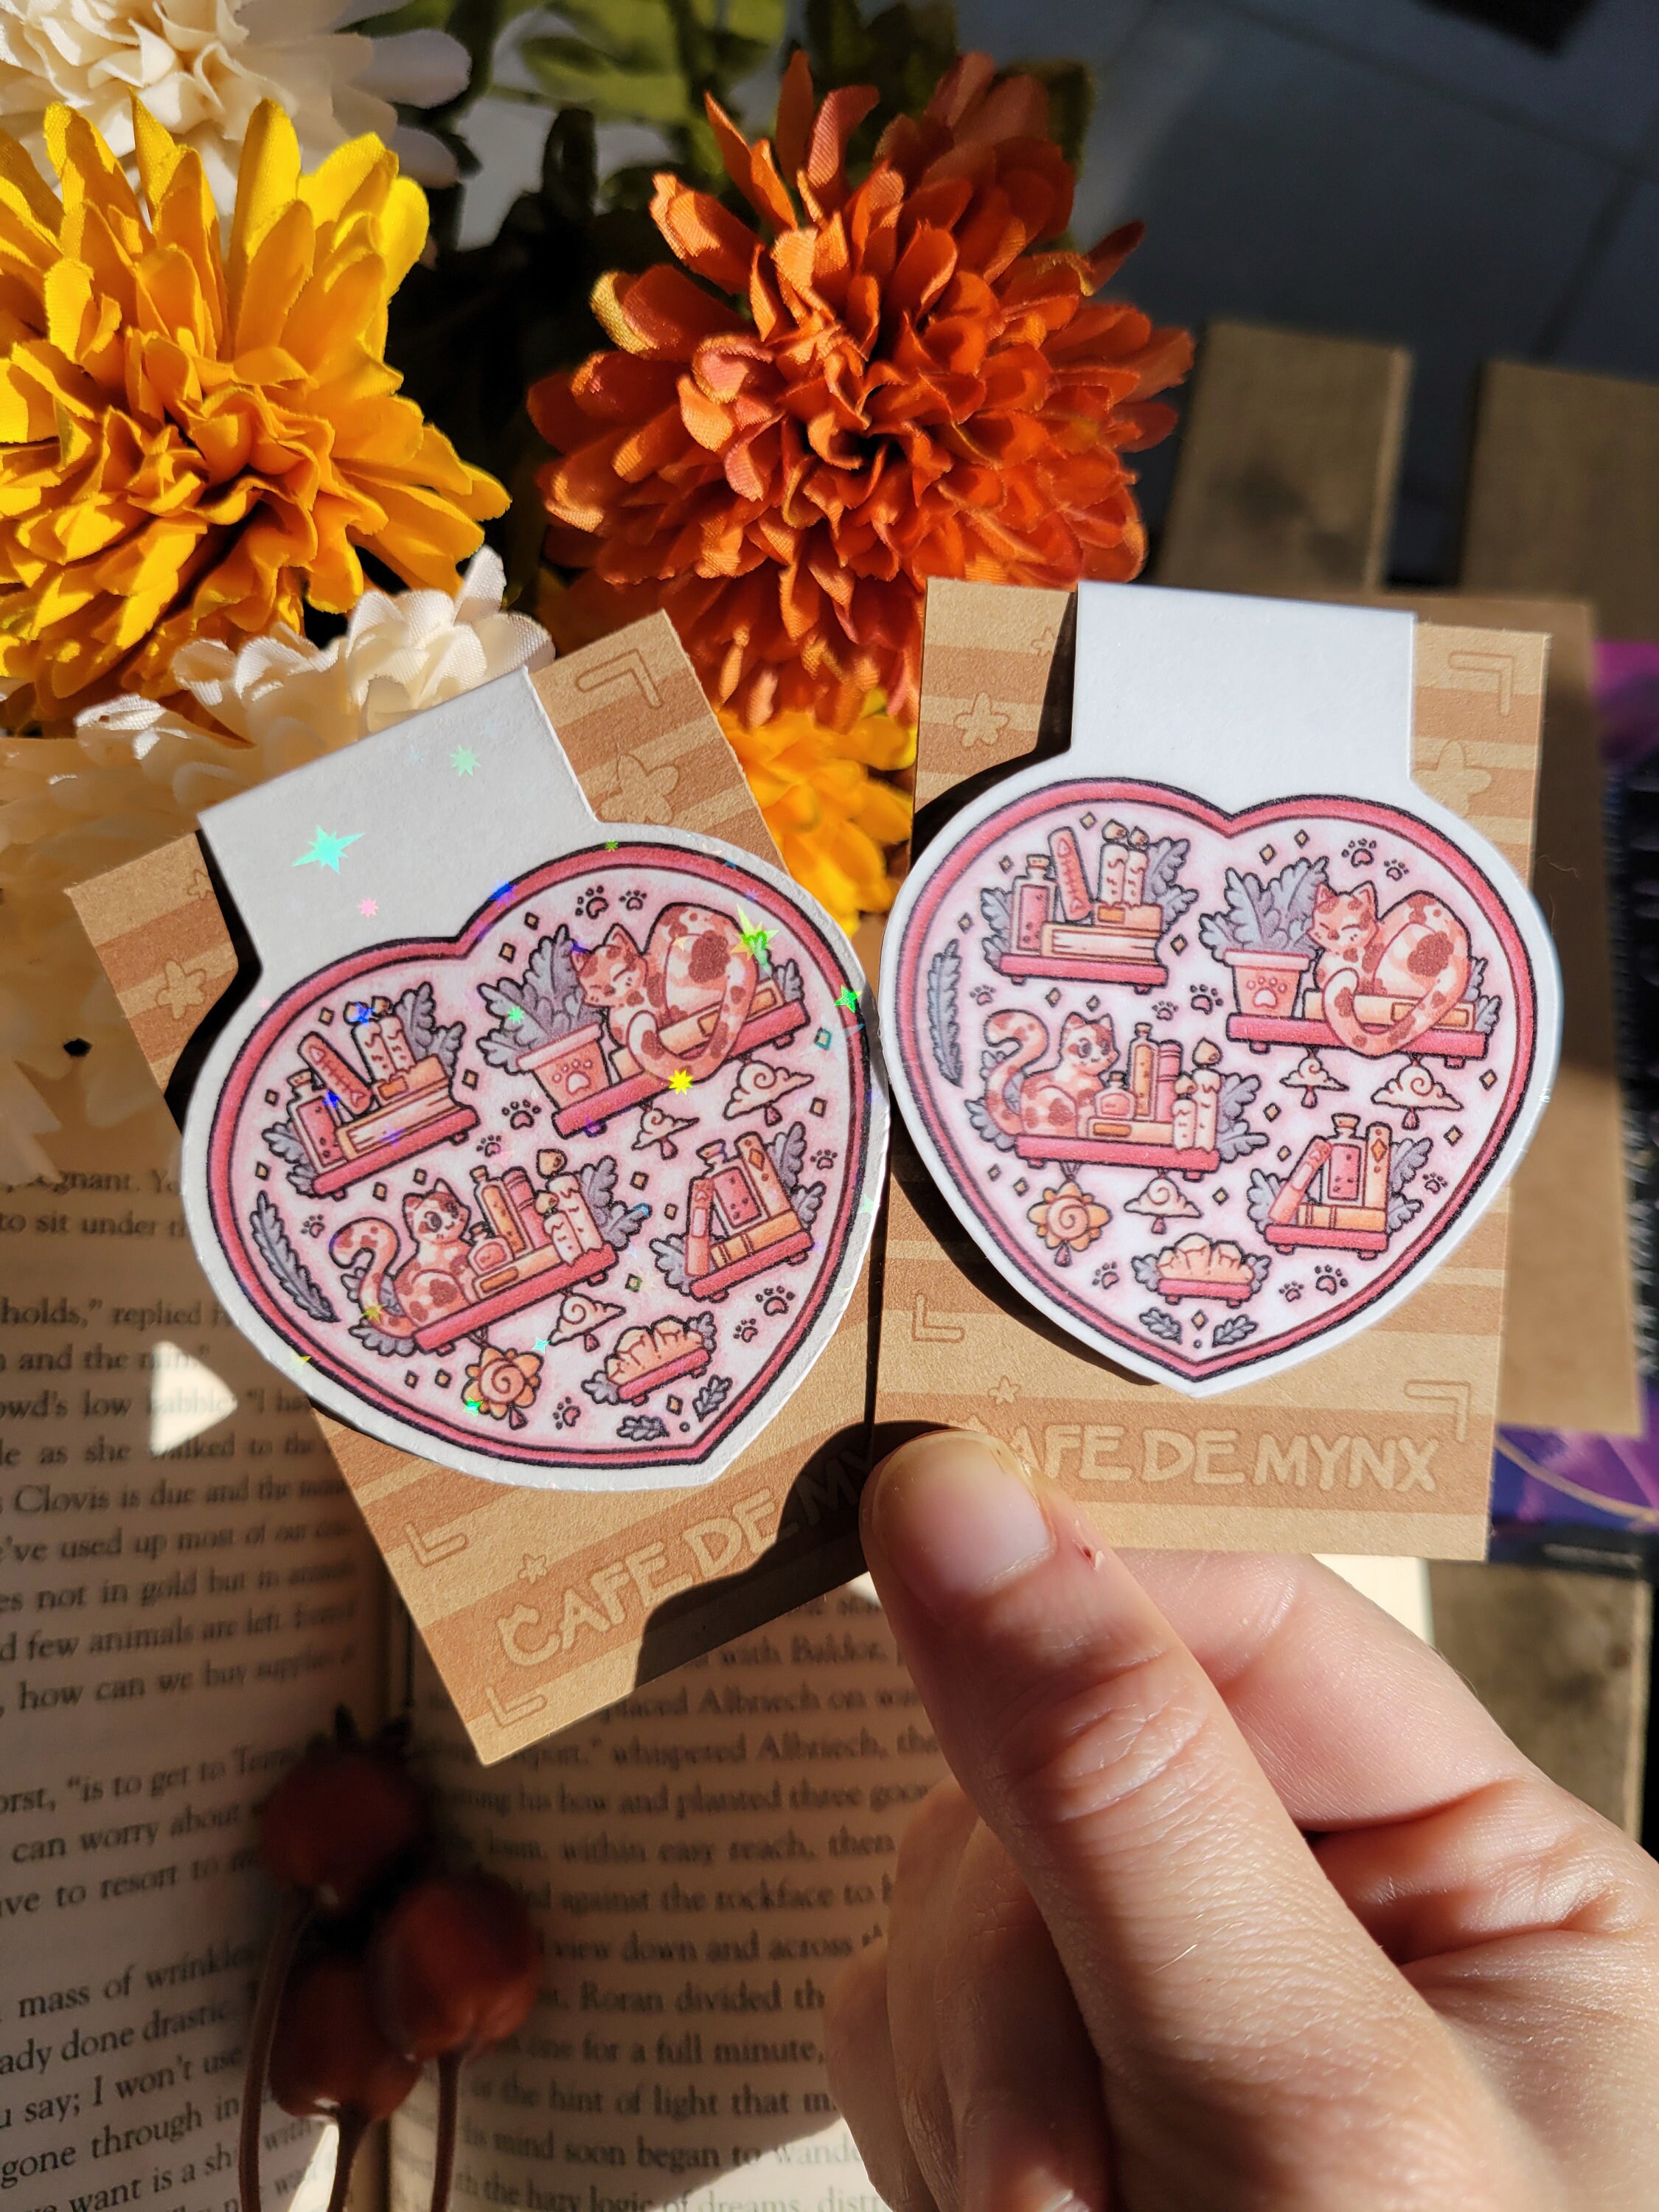 Metal Heart Love Bookmark With Tassel. Gold Bookmark, Reader Gift, Han